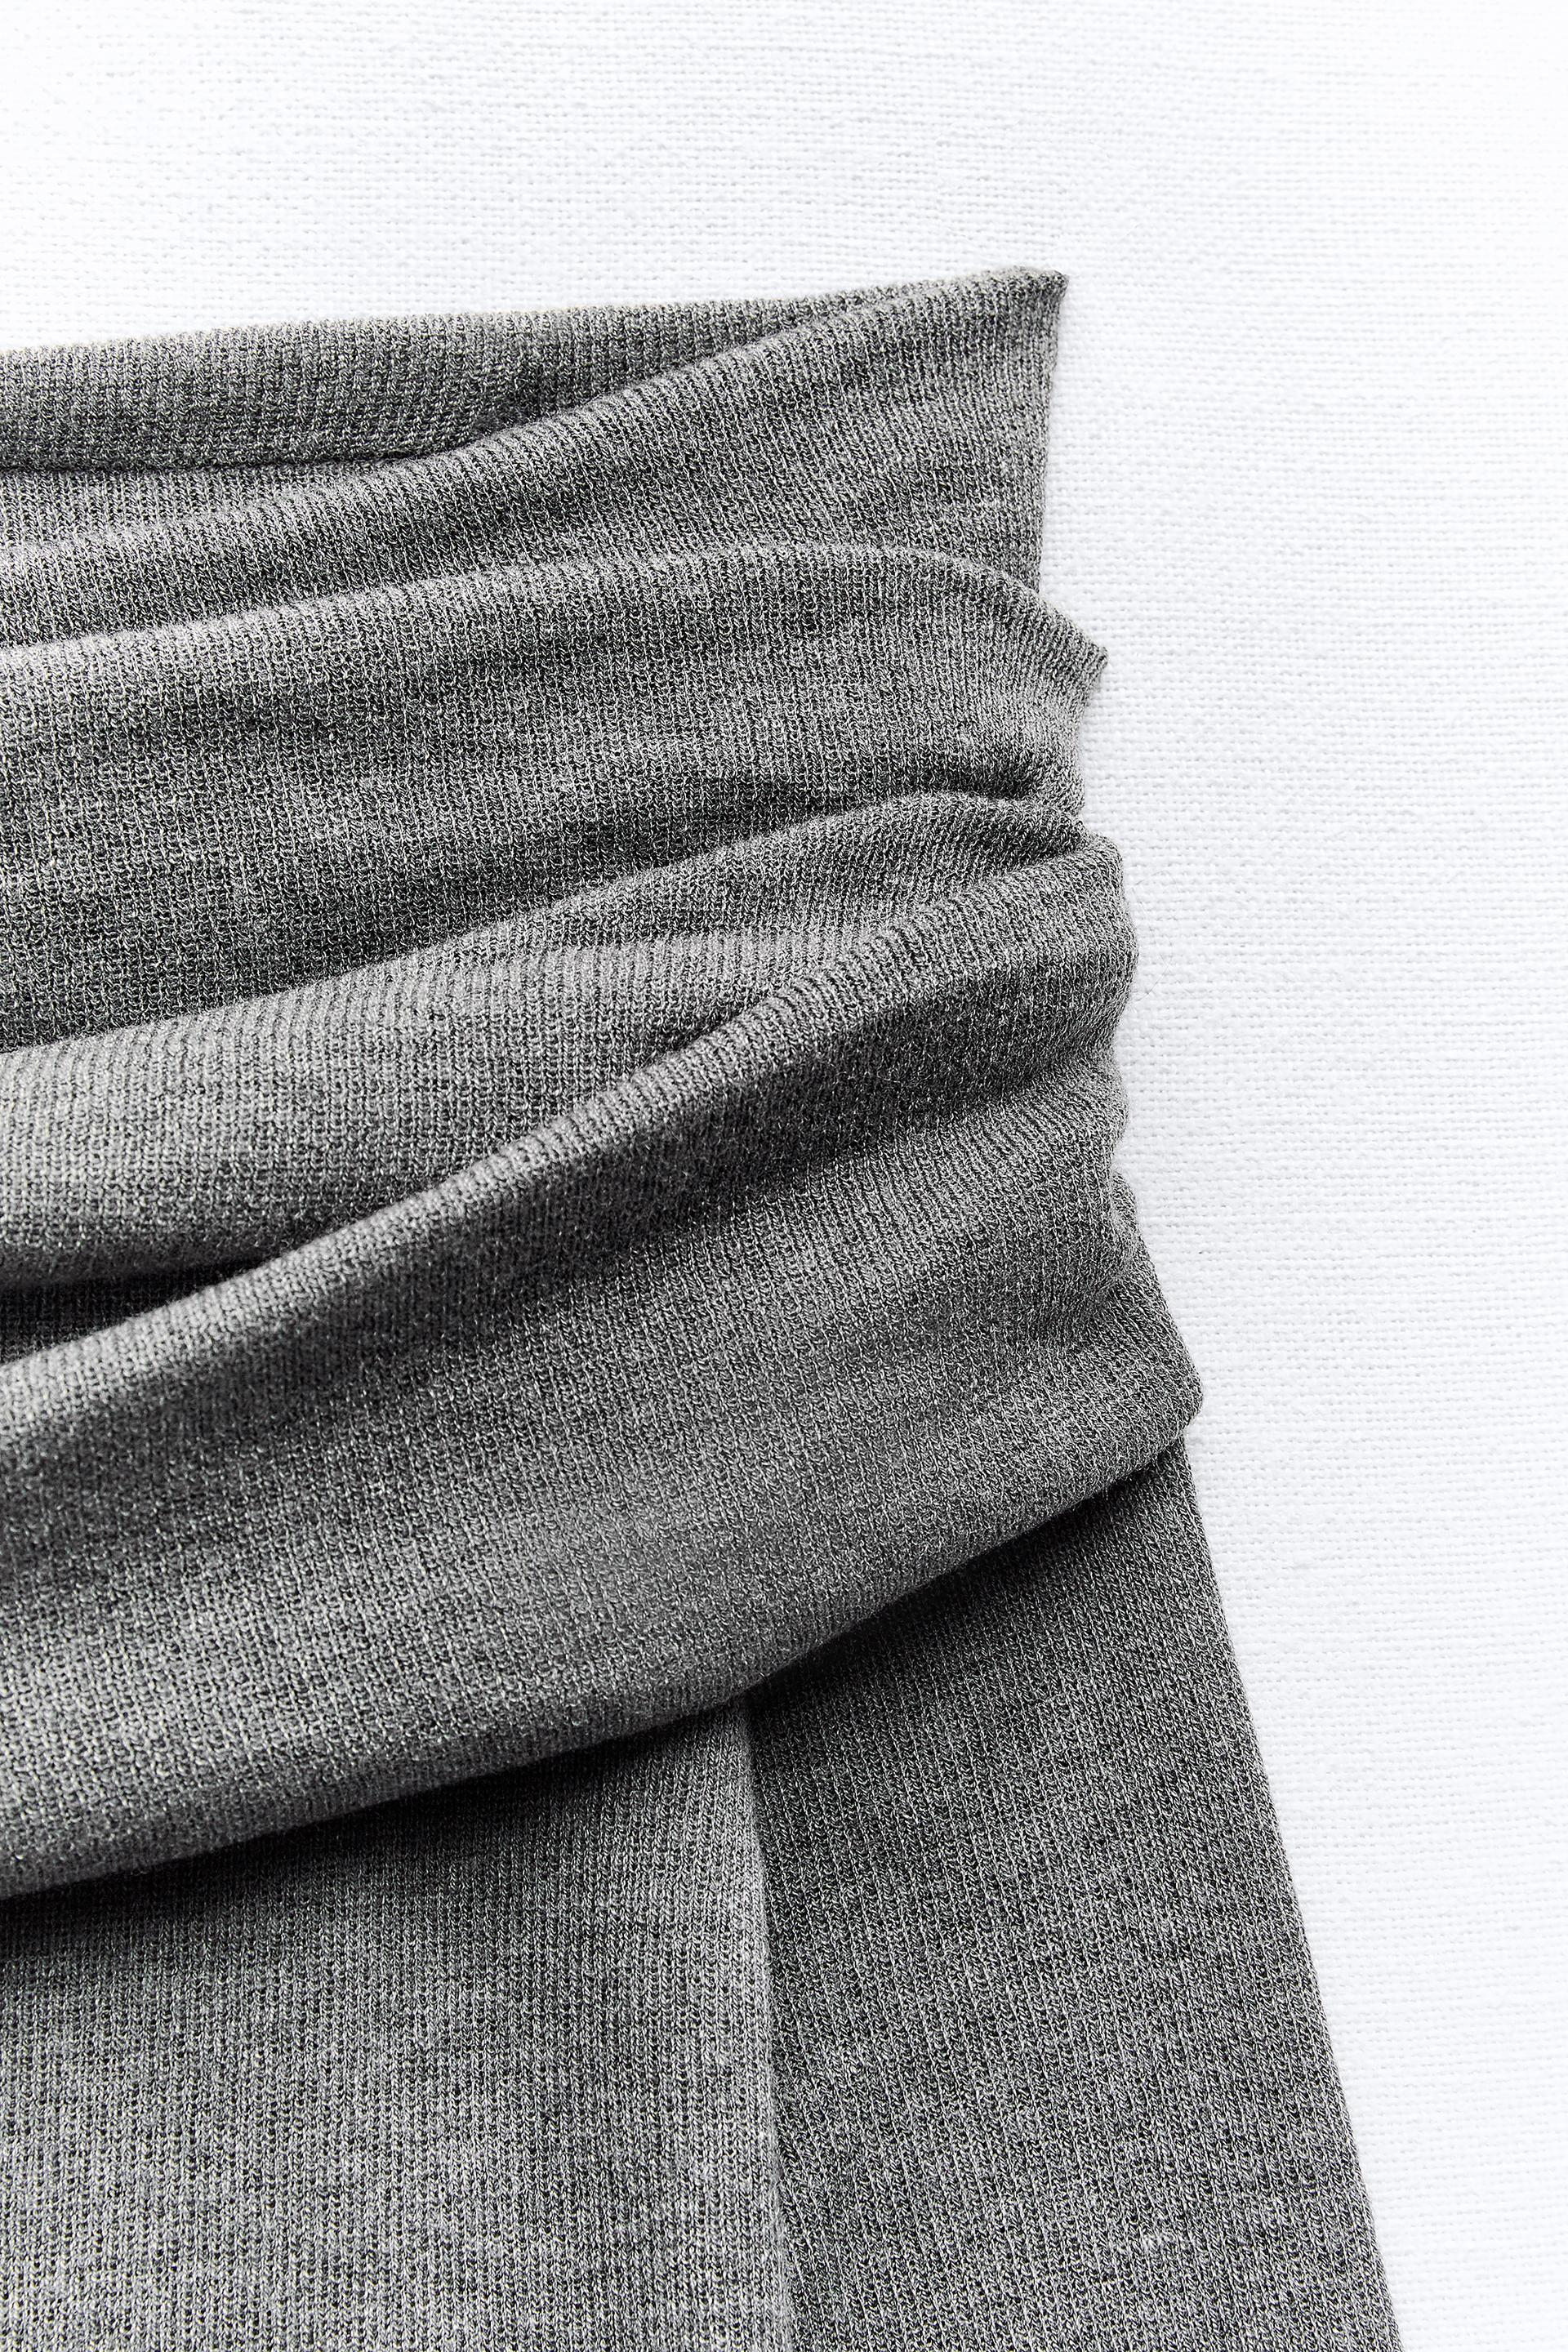 ARKET Ribbed Wool-Blend Tights in Dark Grey